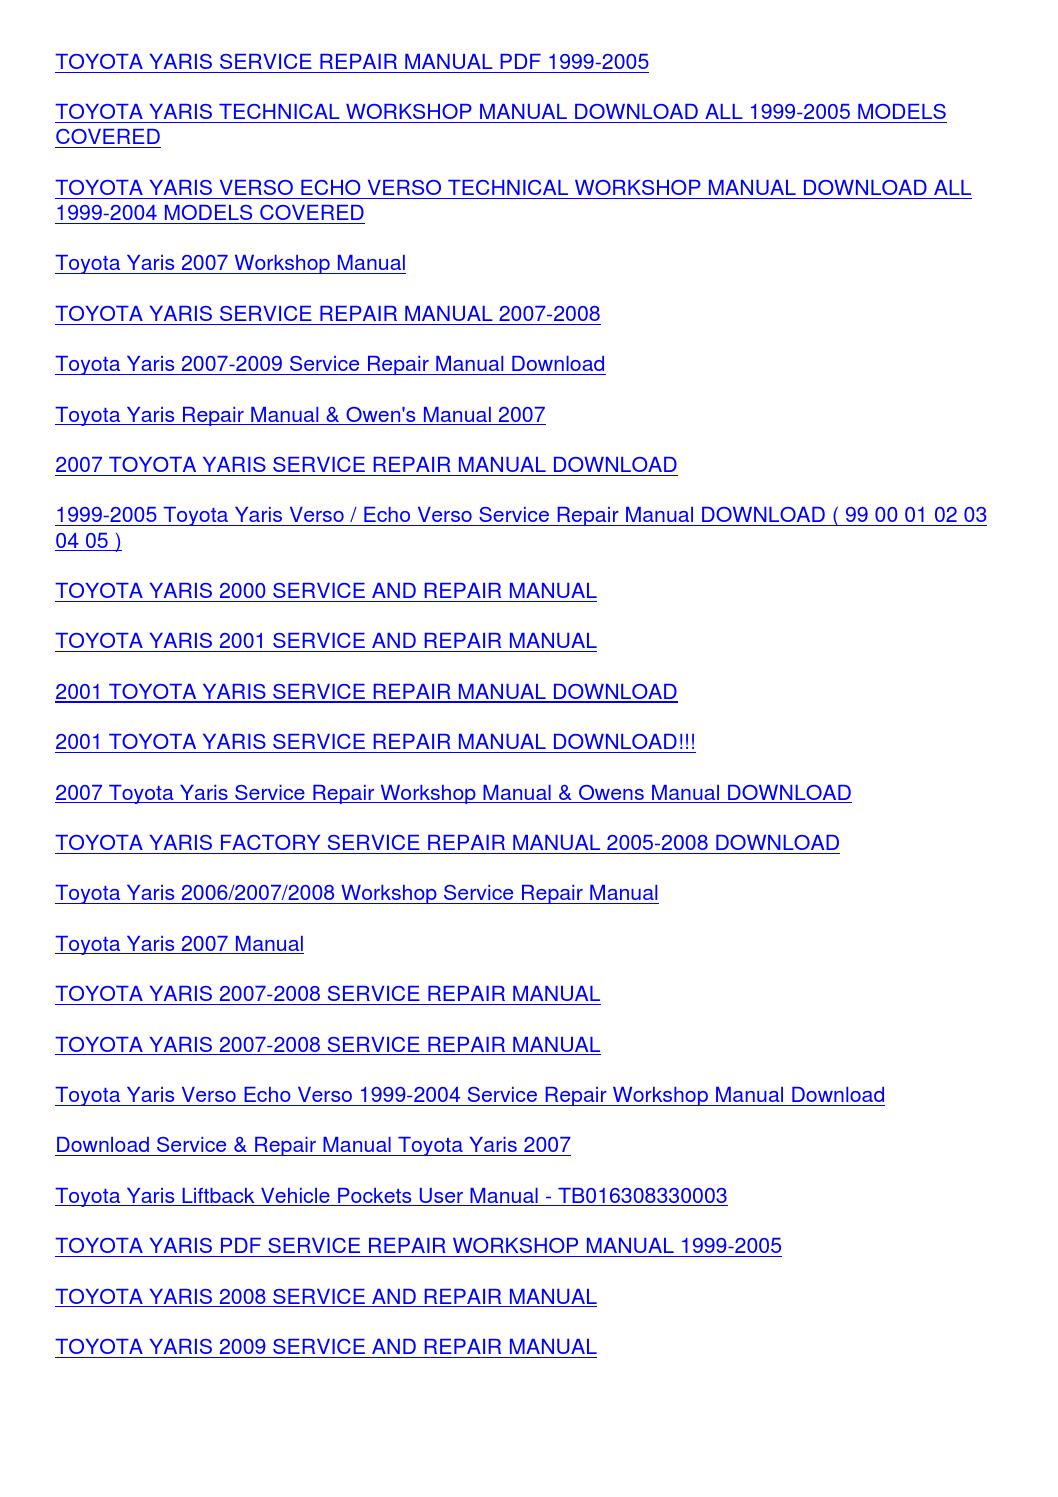 Toyota yaris 2004 service manual pdf